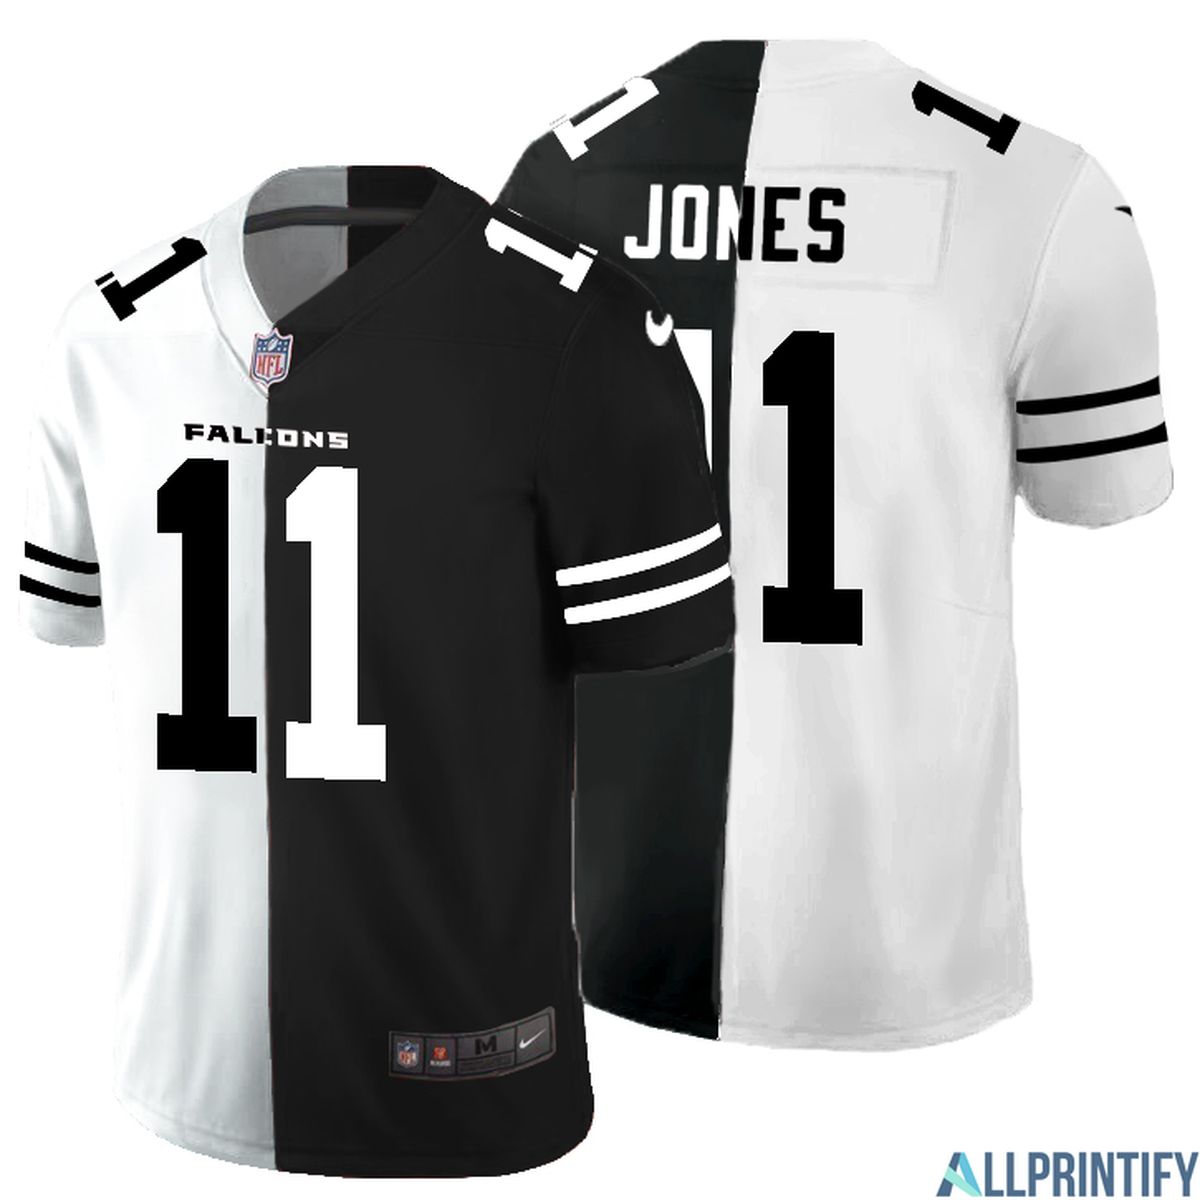 Julio Jones Atlanta Falcons 11 Black And White Vapor Limited Jersey